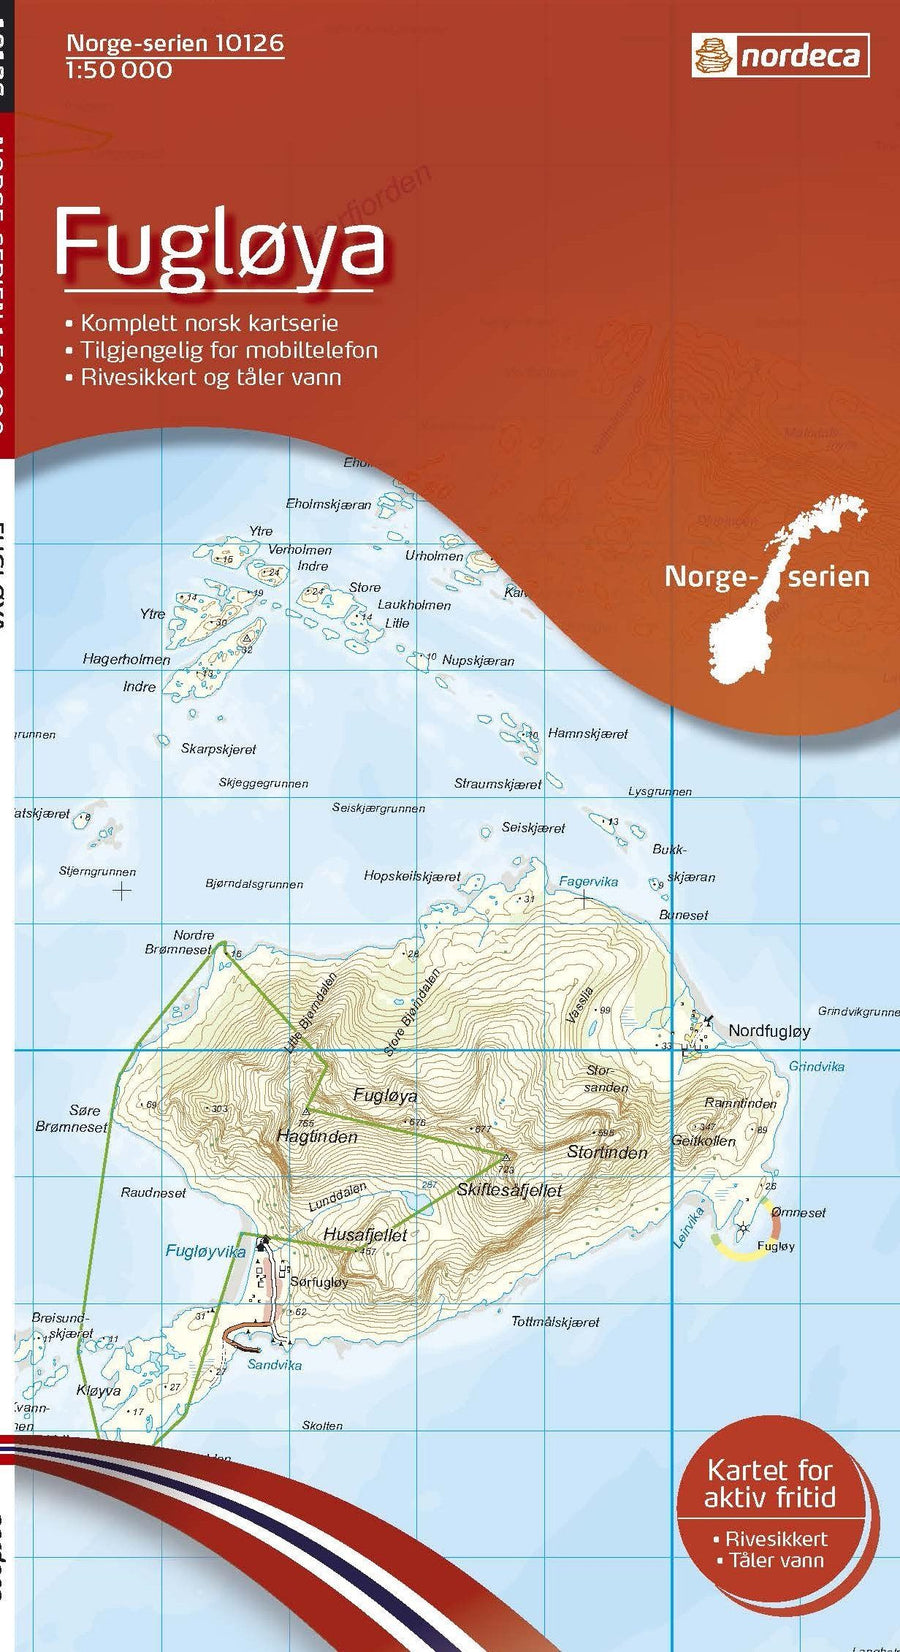 Carte de randonnée n° 10126 - Fugloya (Norvège) | Nordeca - Norge-serien carte pliée Nordeca 